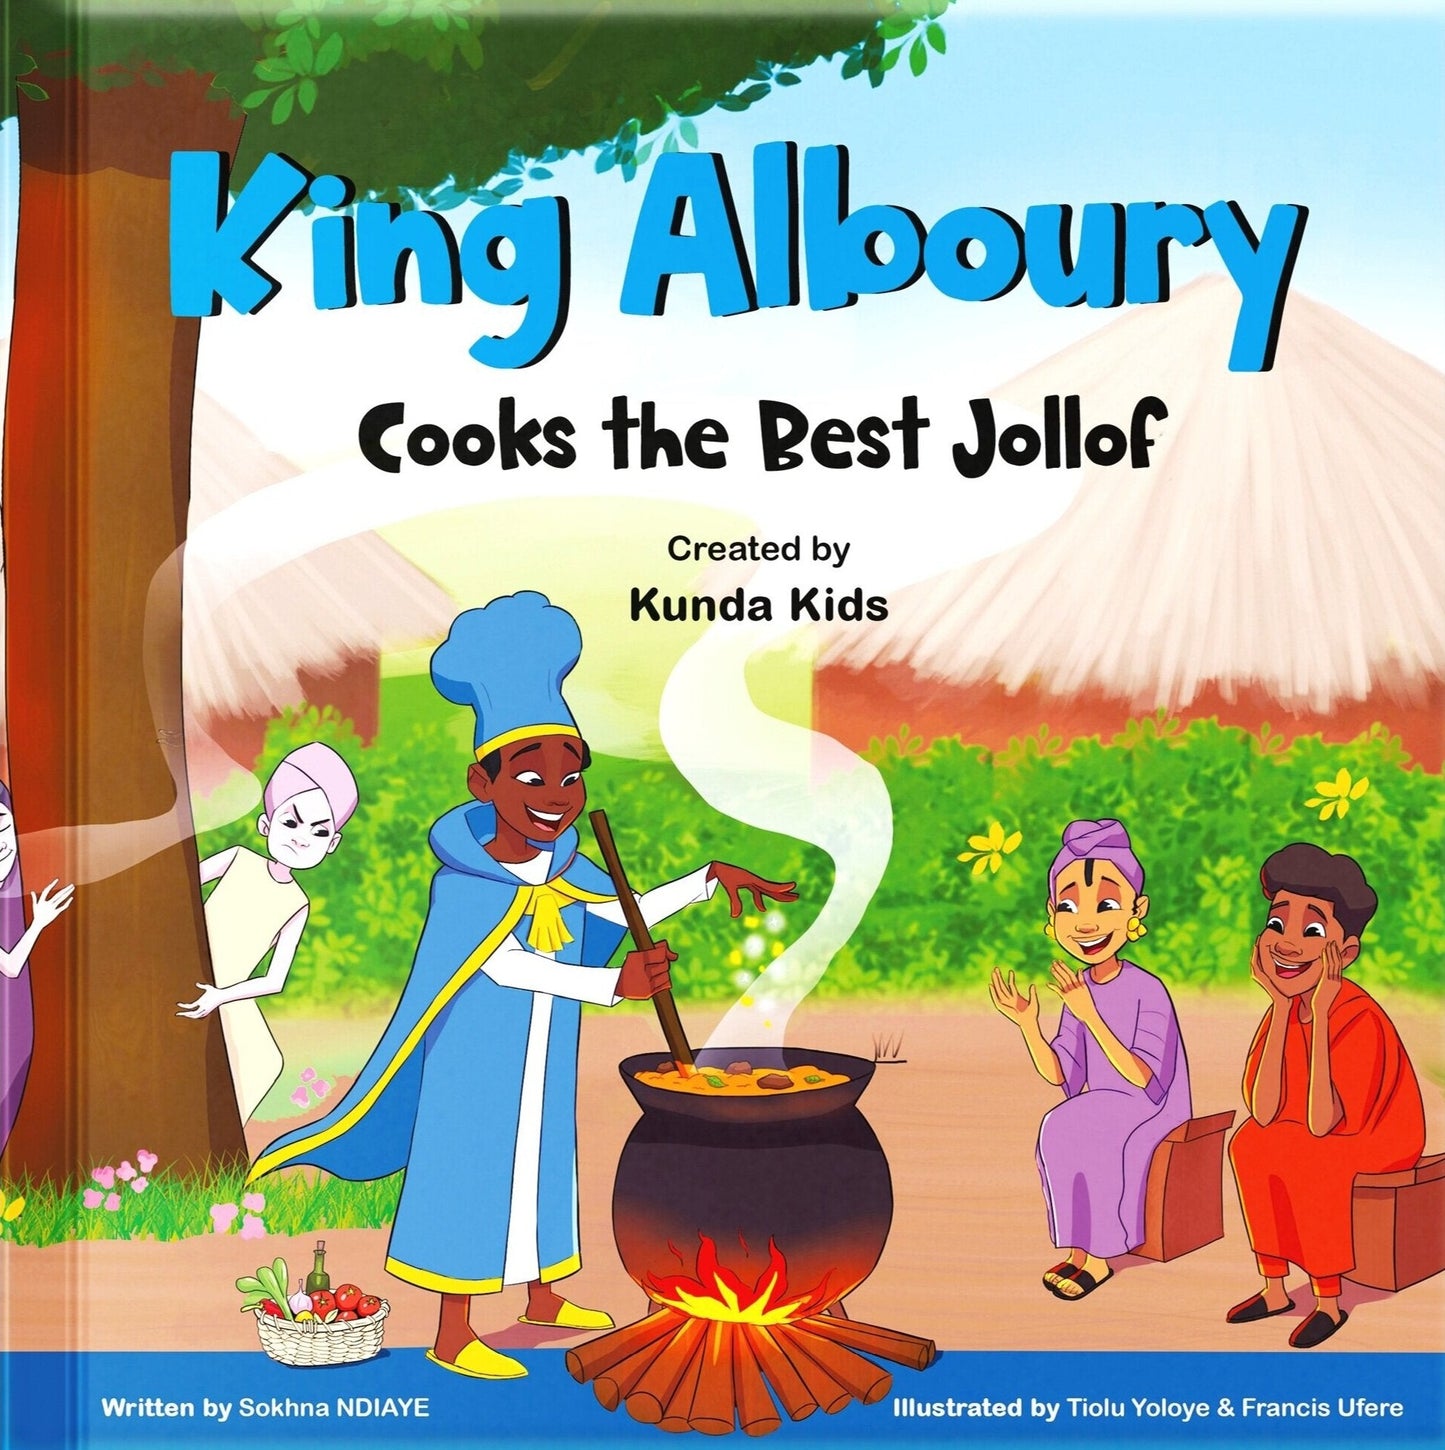 King Alboury Cooks the Best Jollof